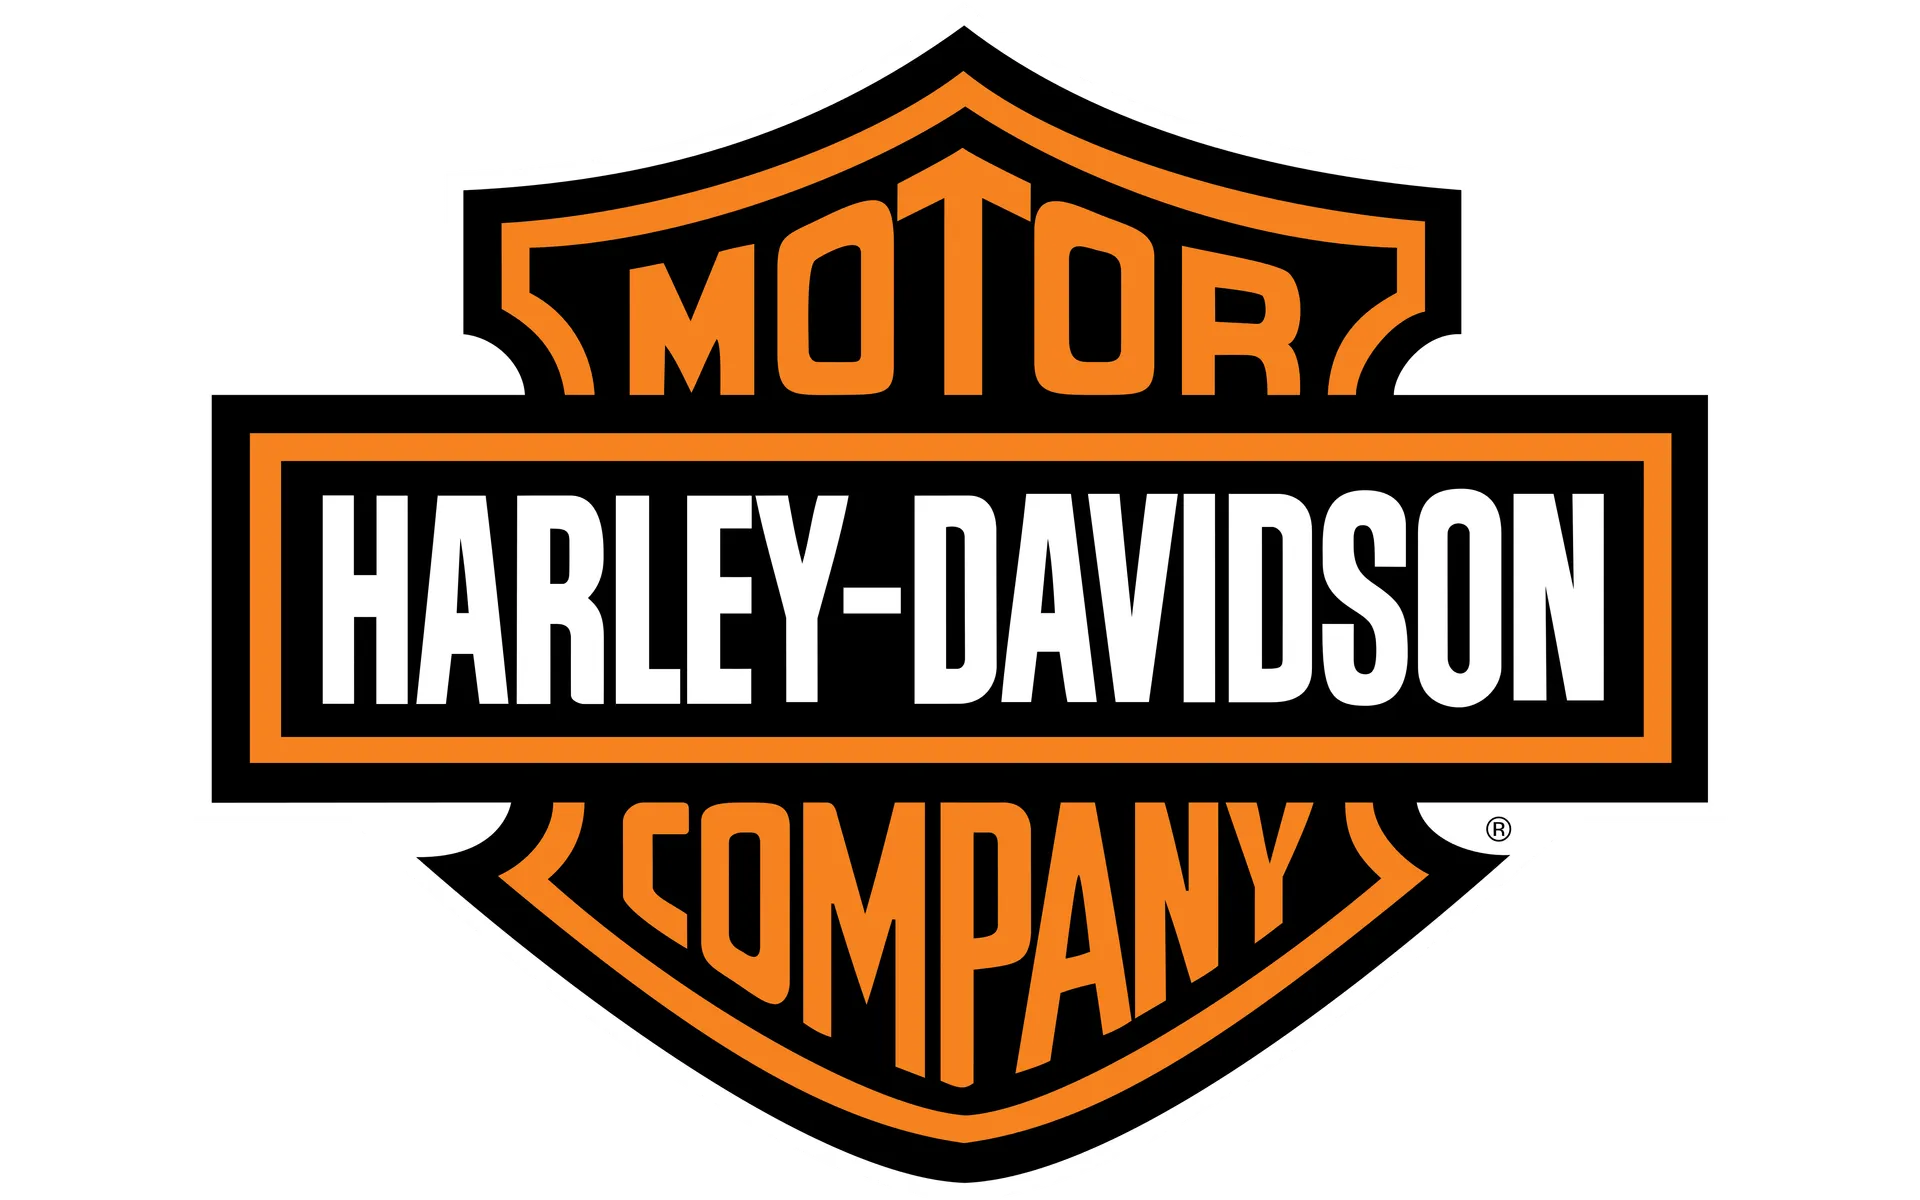 HARLEY DAVIDSON logo